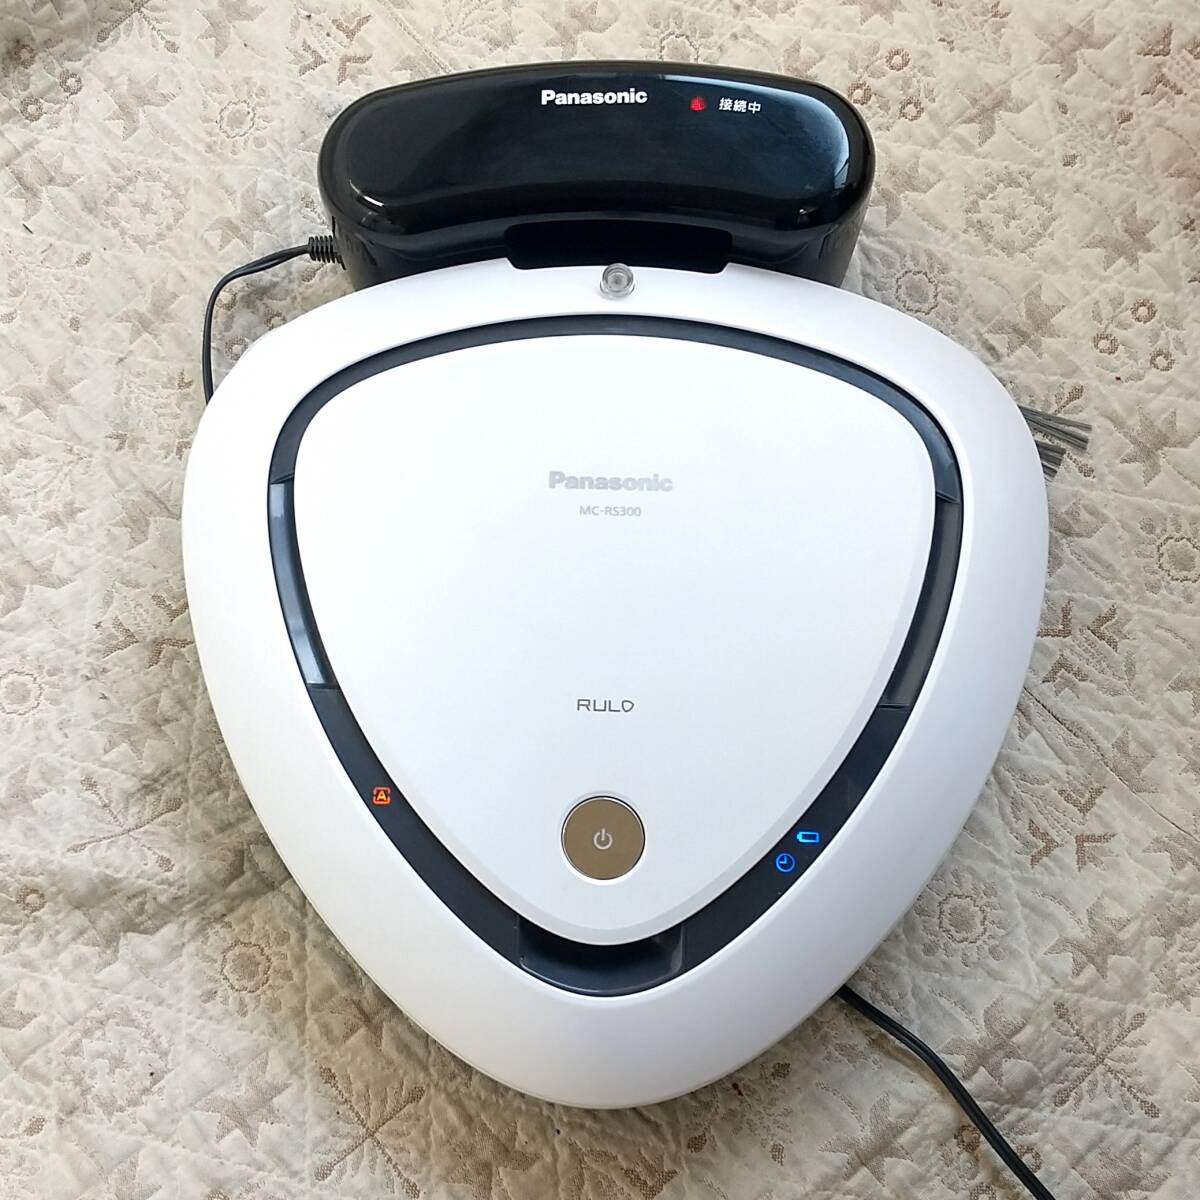 [885] secondhand goods Panasonic MC-RS300-W robot vacuum cleaner 2018 year made 